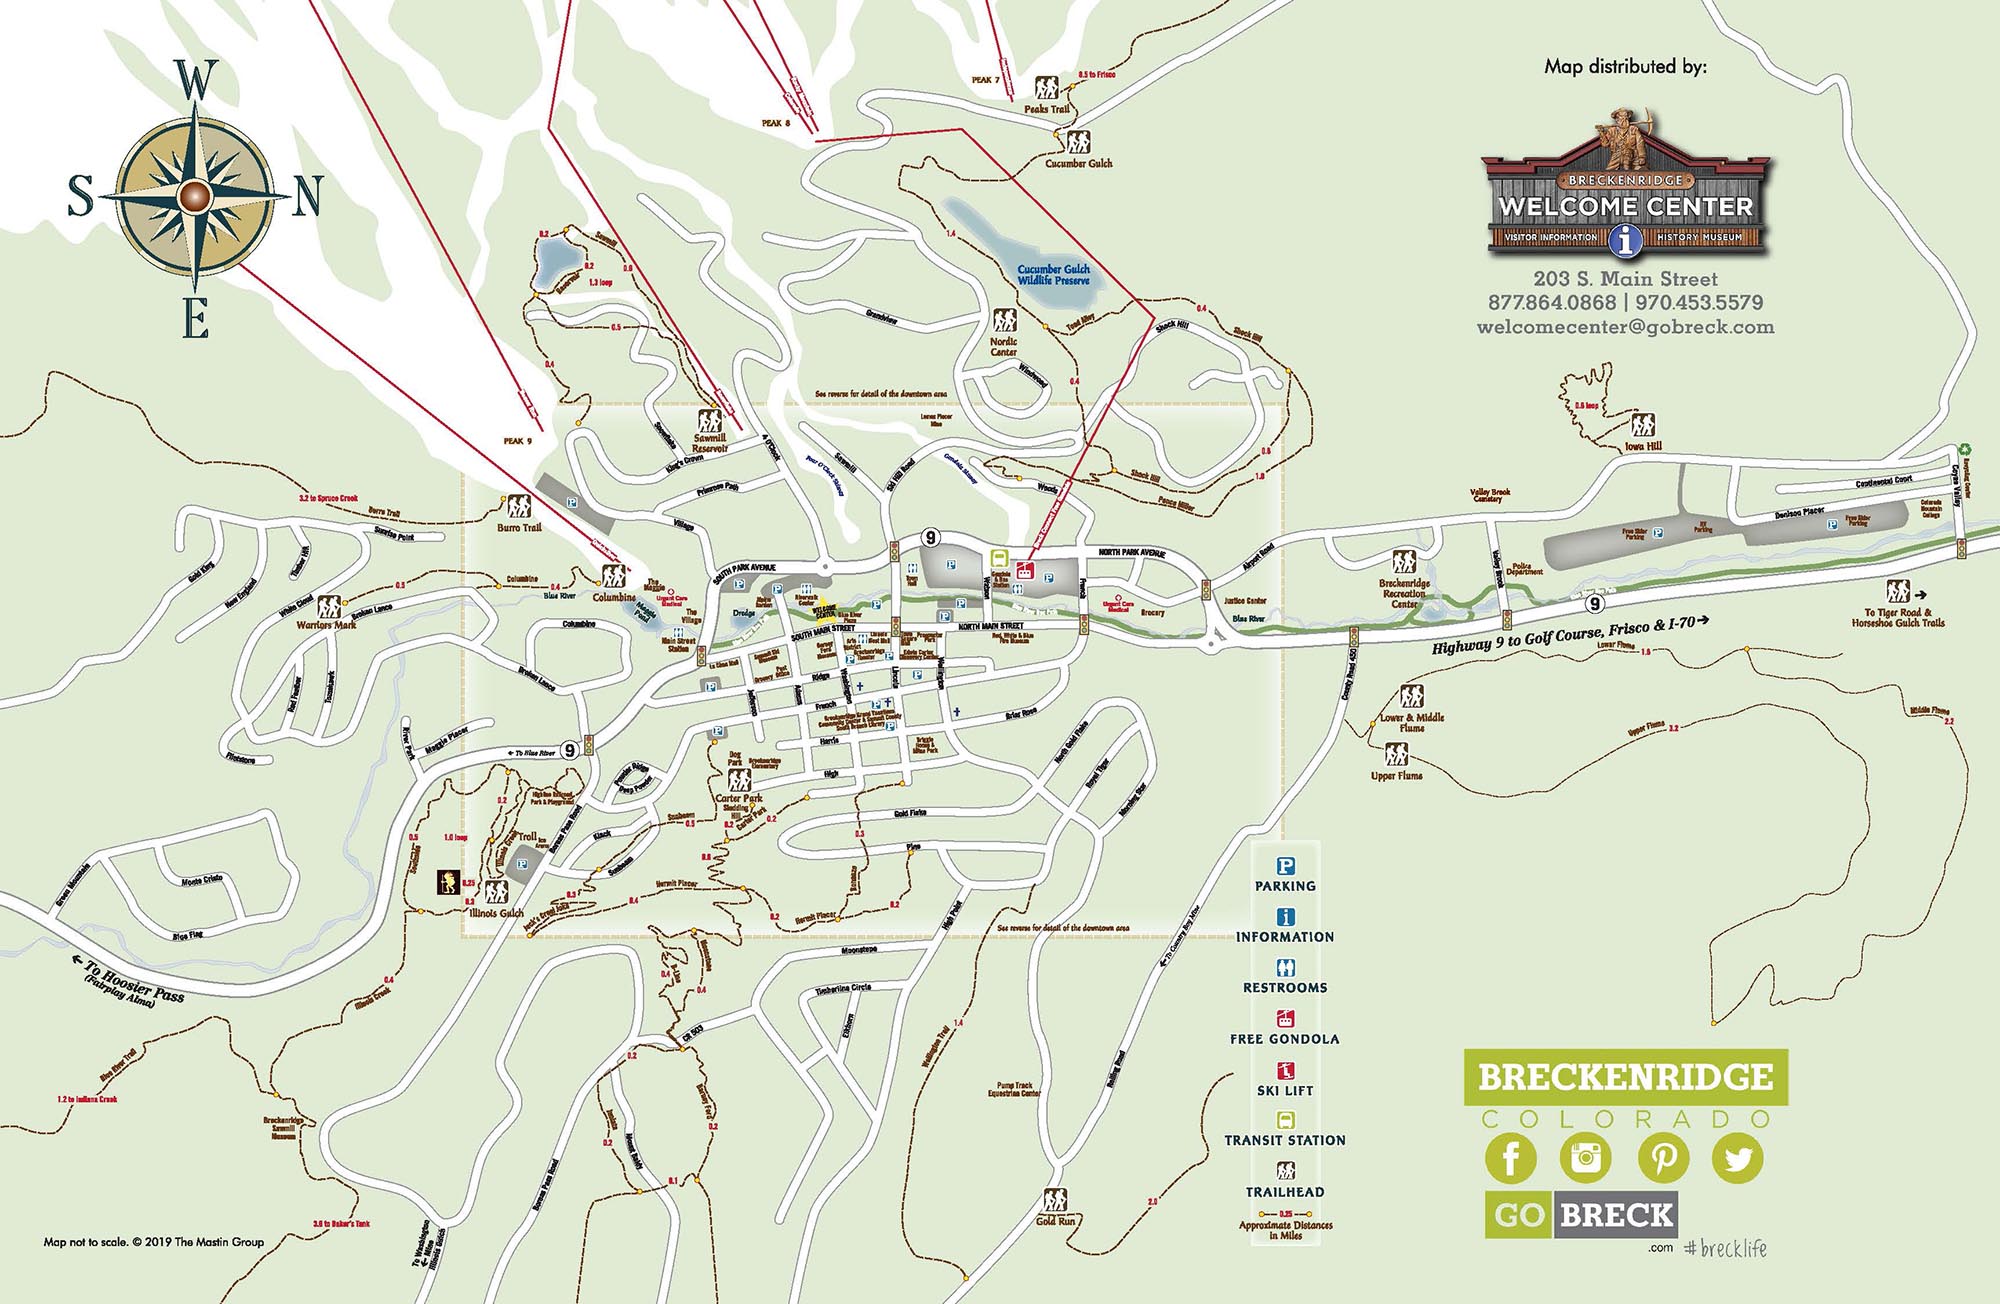 Breckenridge's public transportation system map